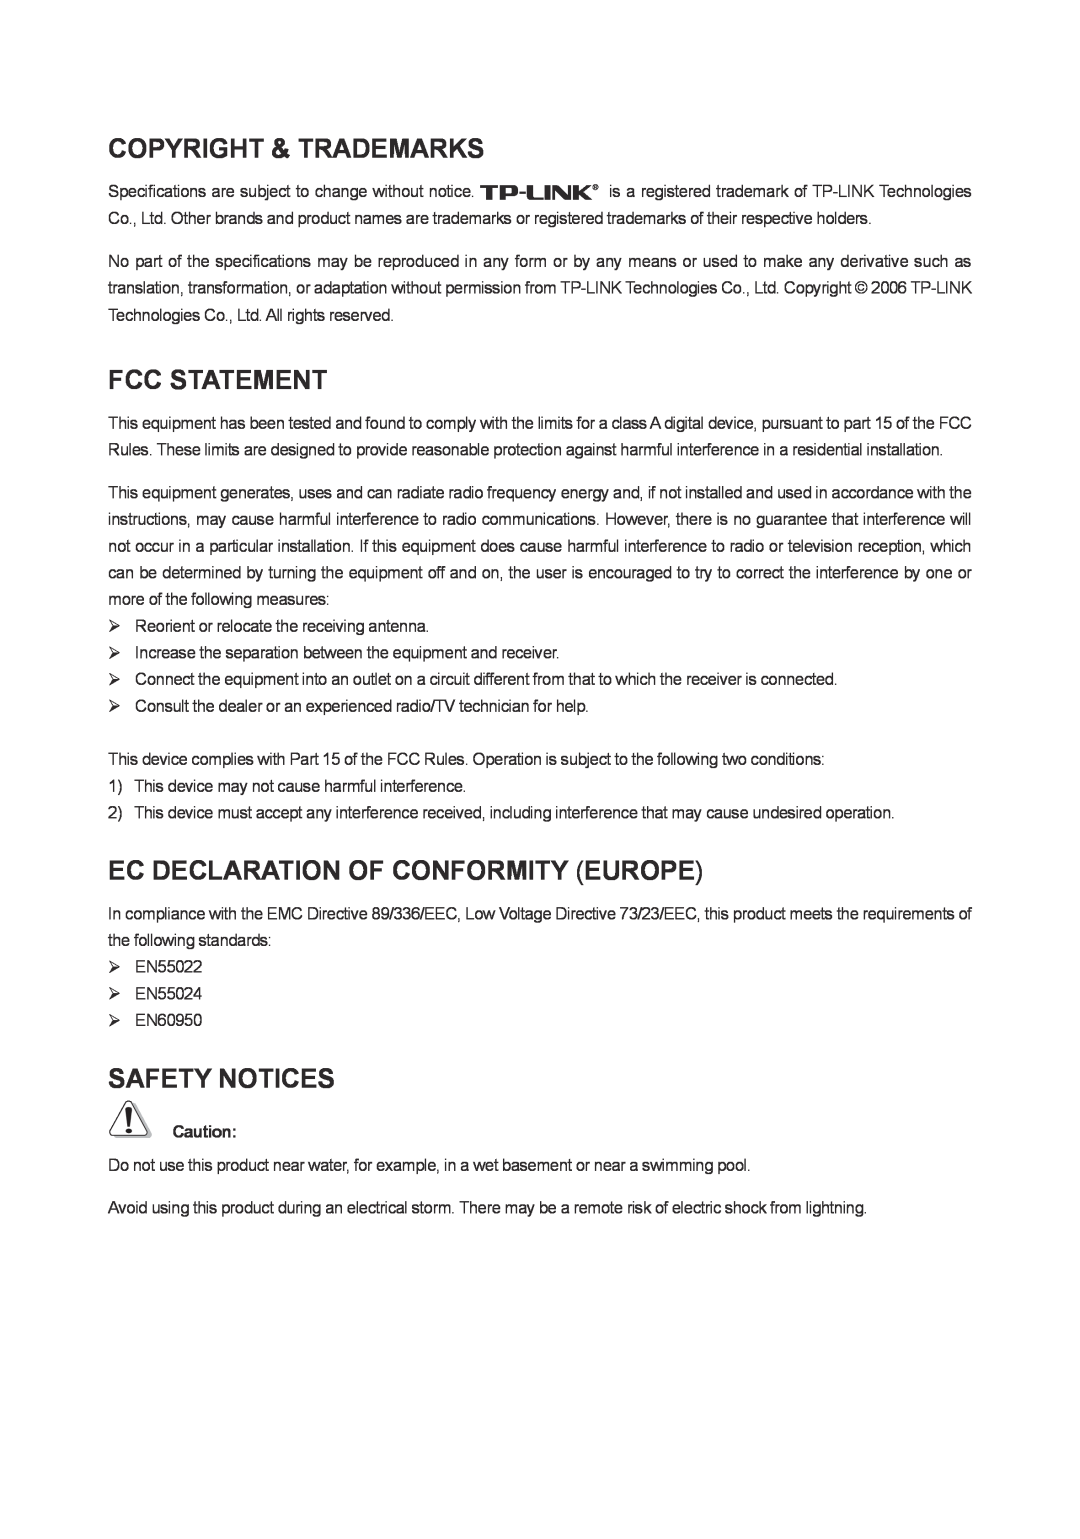 TP-Link TL-SG3109, TL-SL3452 Copyright & Trademarks, Fcc Statement, Ec Declaration Of Conformity Europe, Safety Notices 